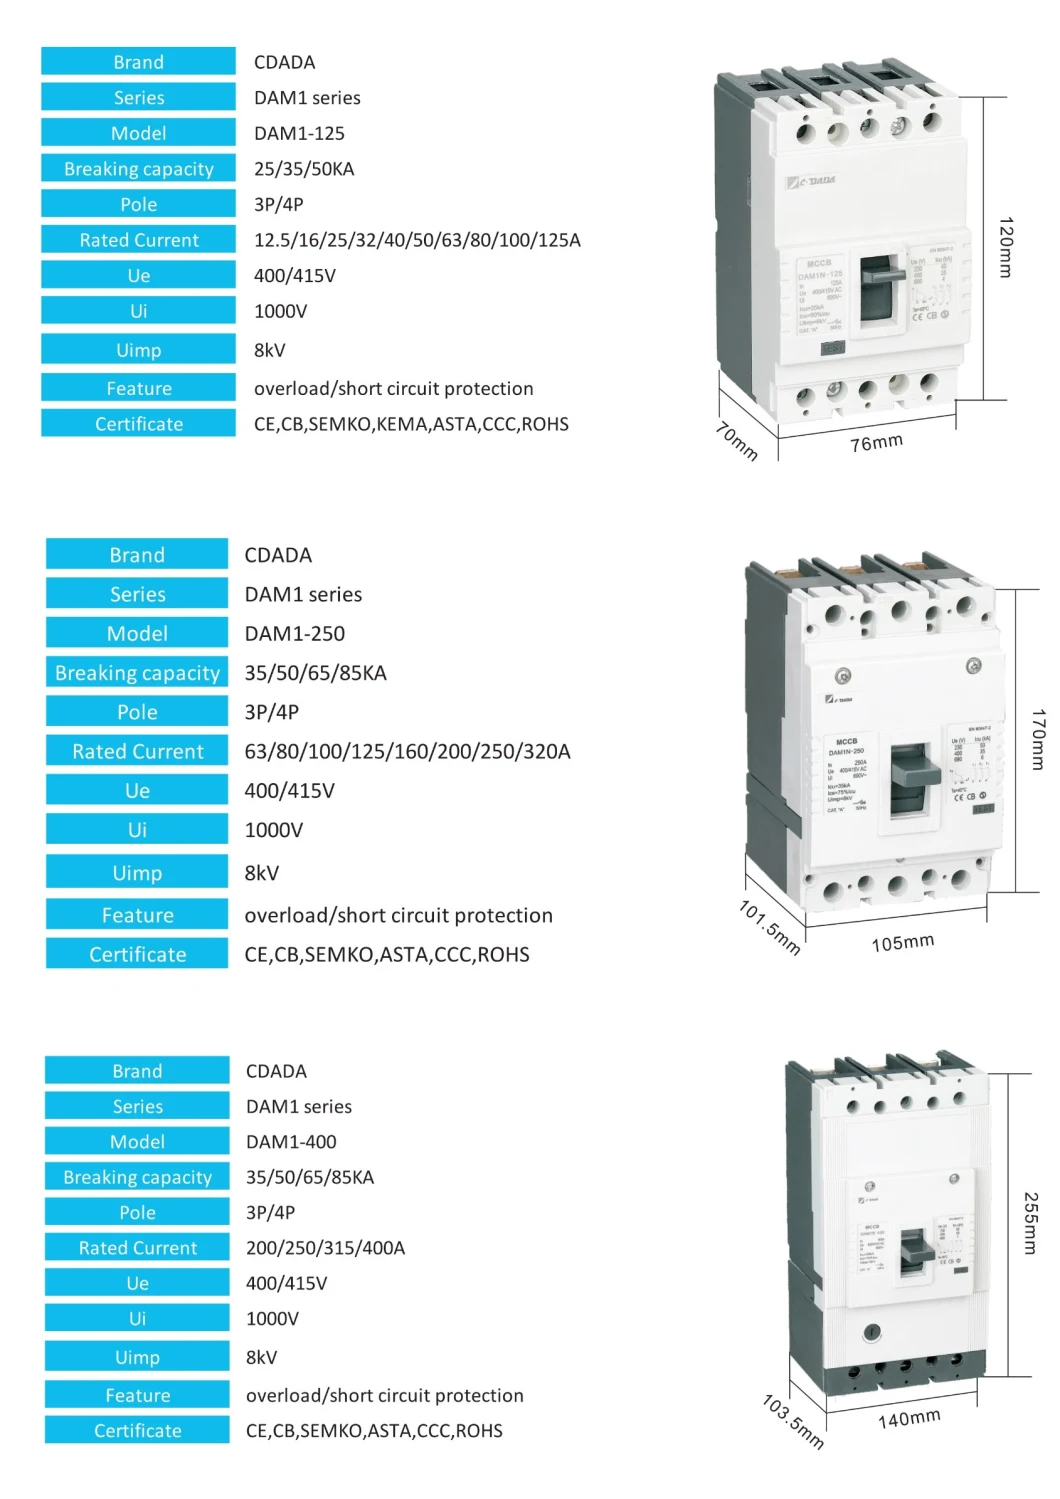 Thermal Adjustable MCCB Dam1-250 3p Moulded Case Circuit Breaker